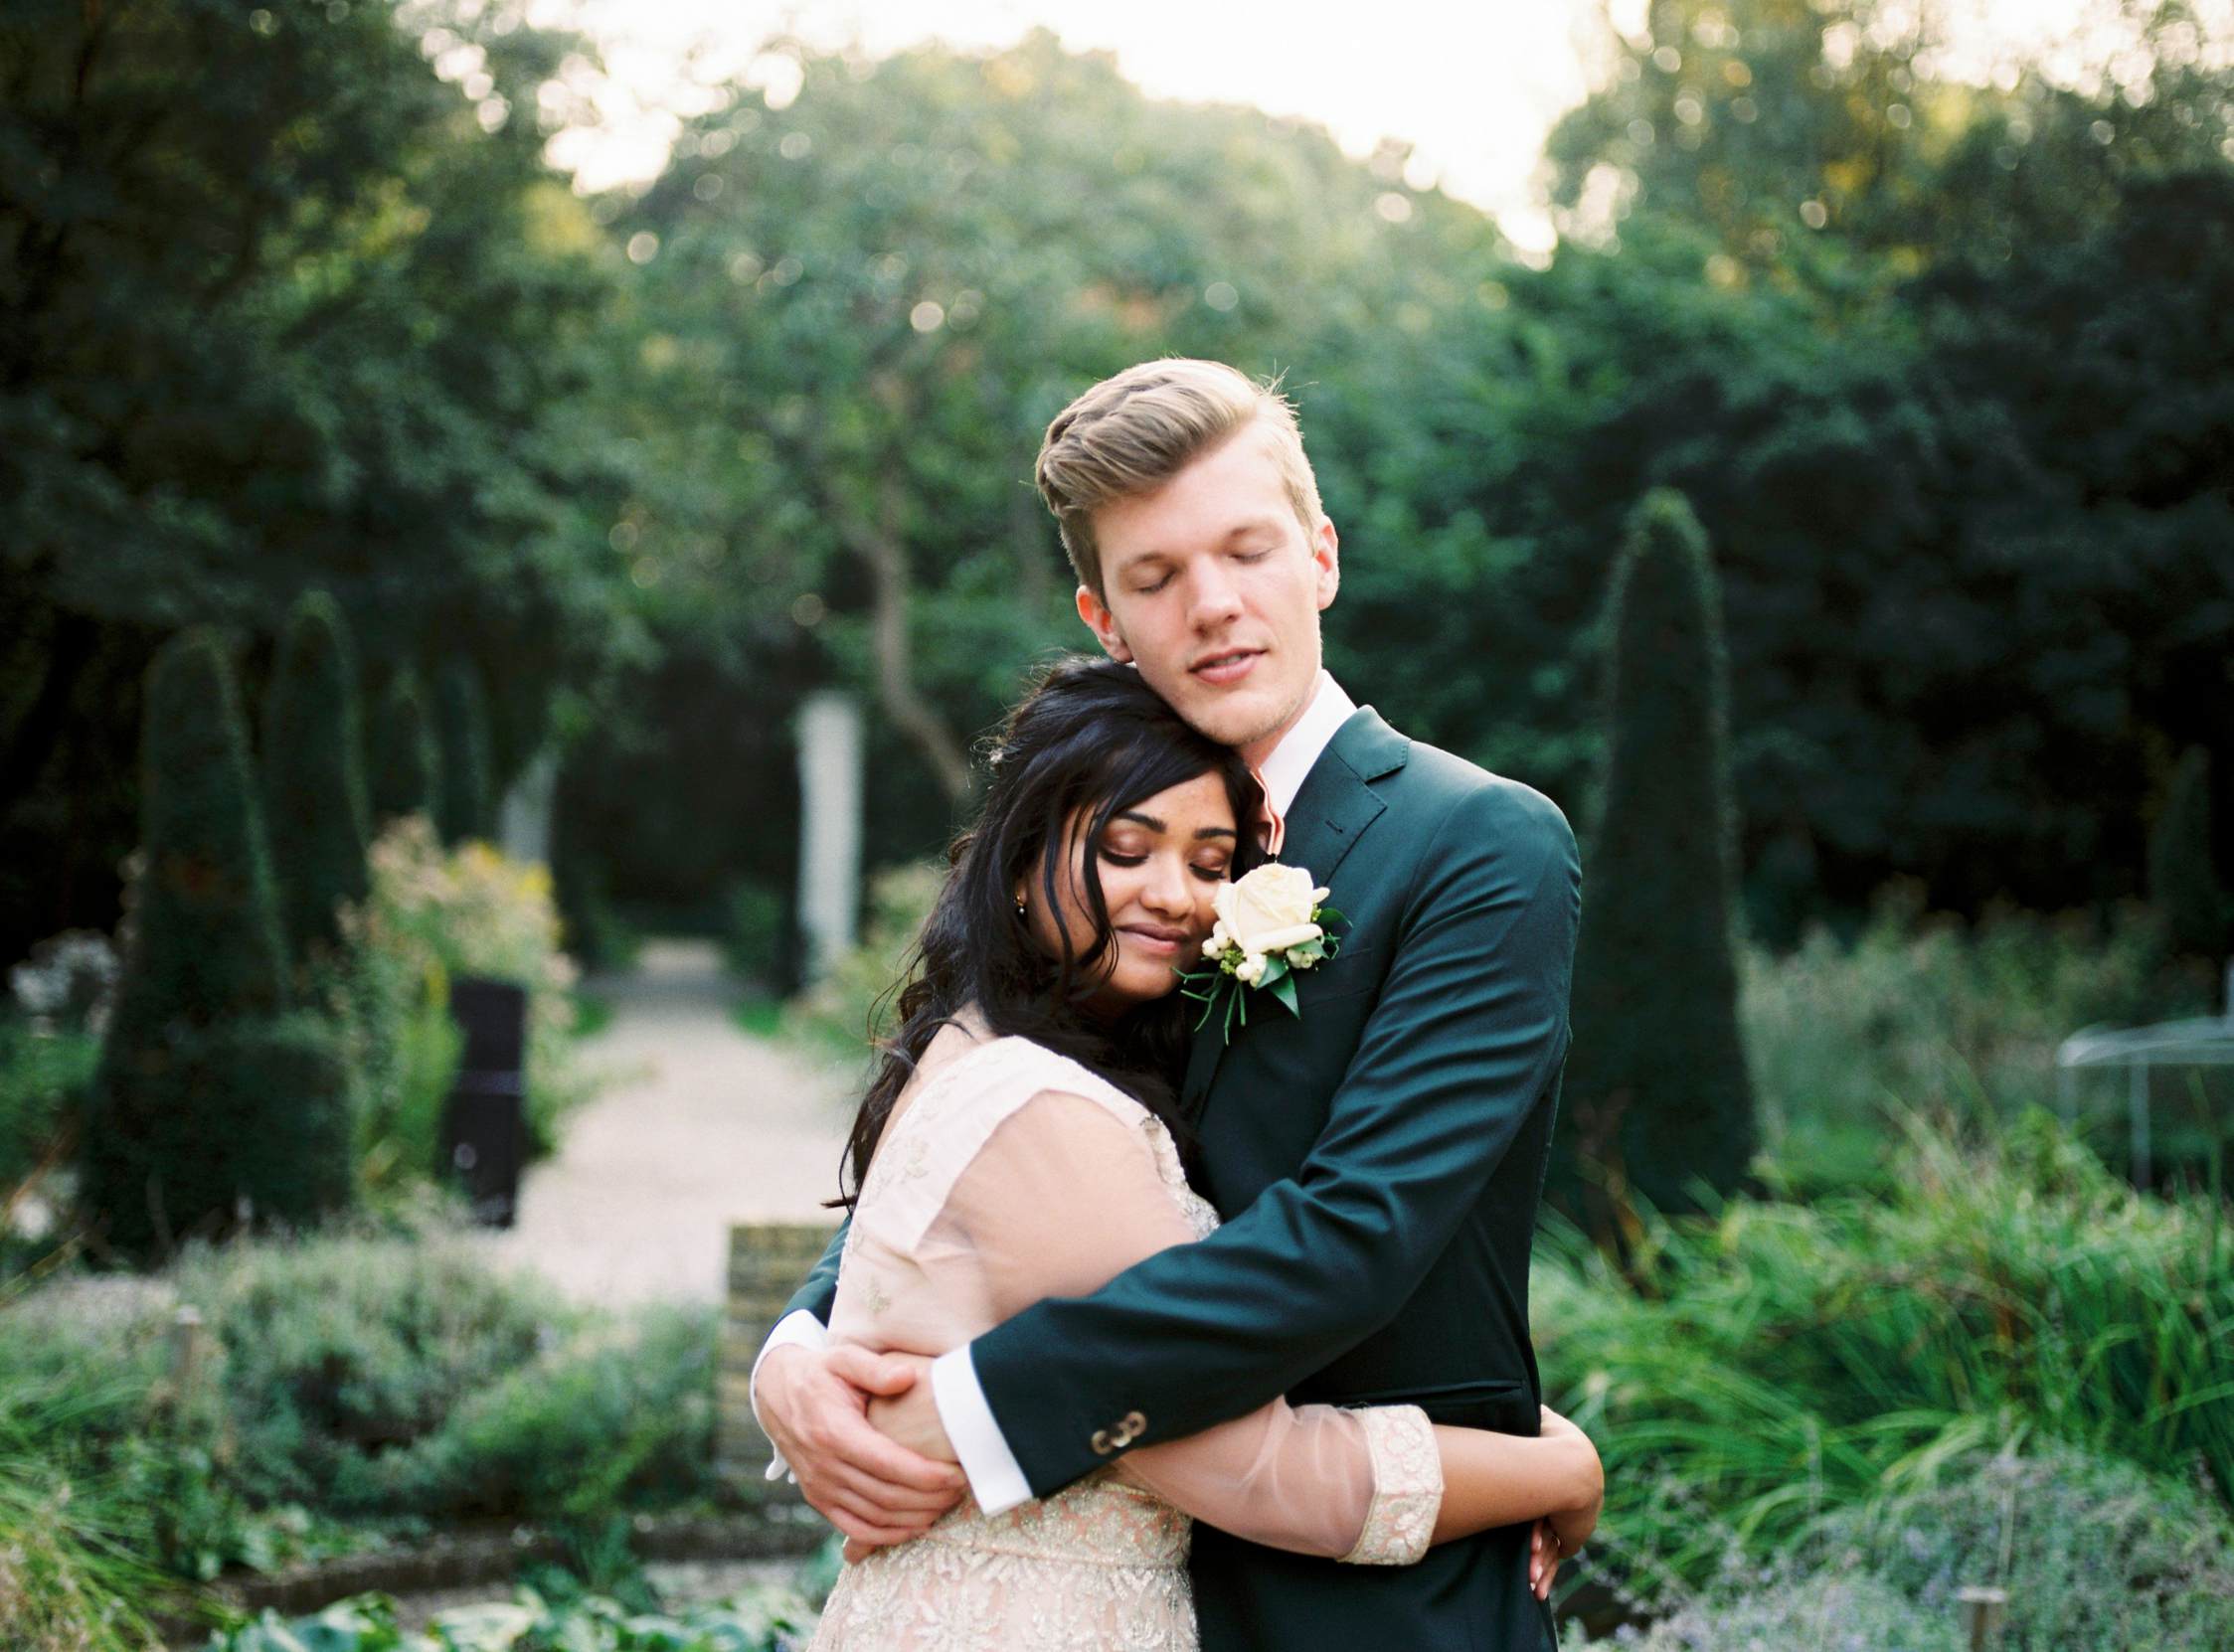 Wedding photographer Amsterdam - Romantic couple shoot